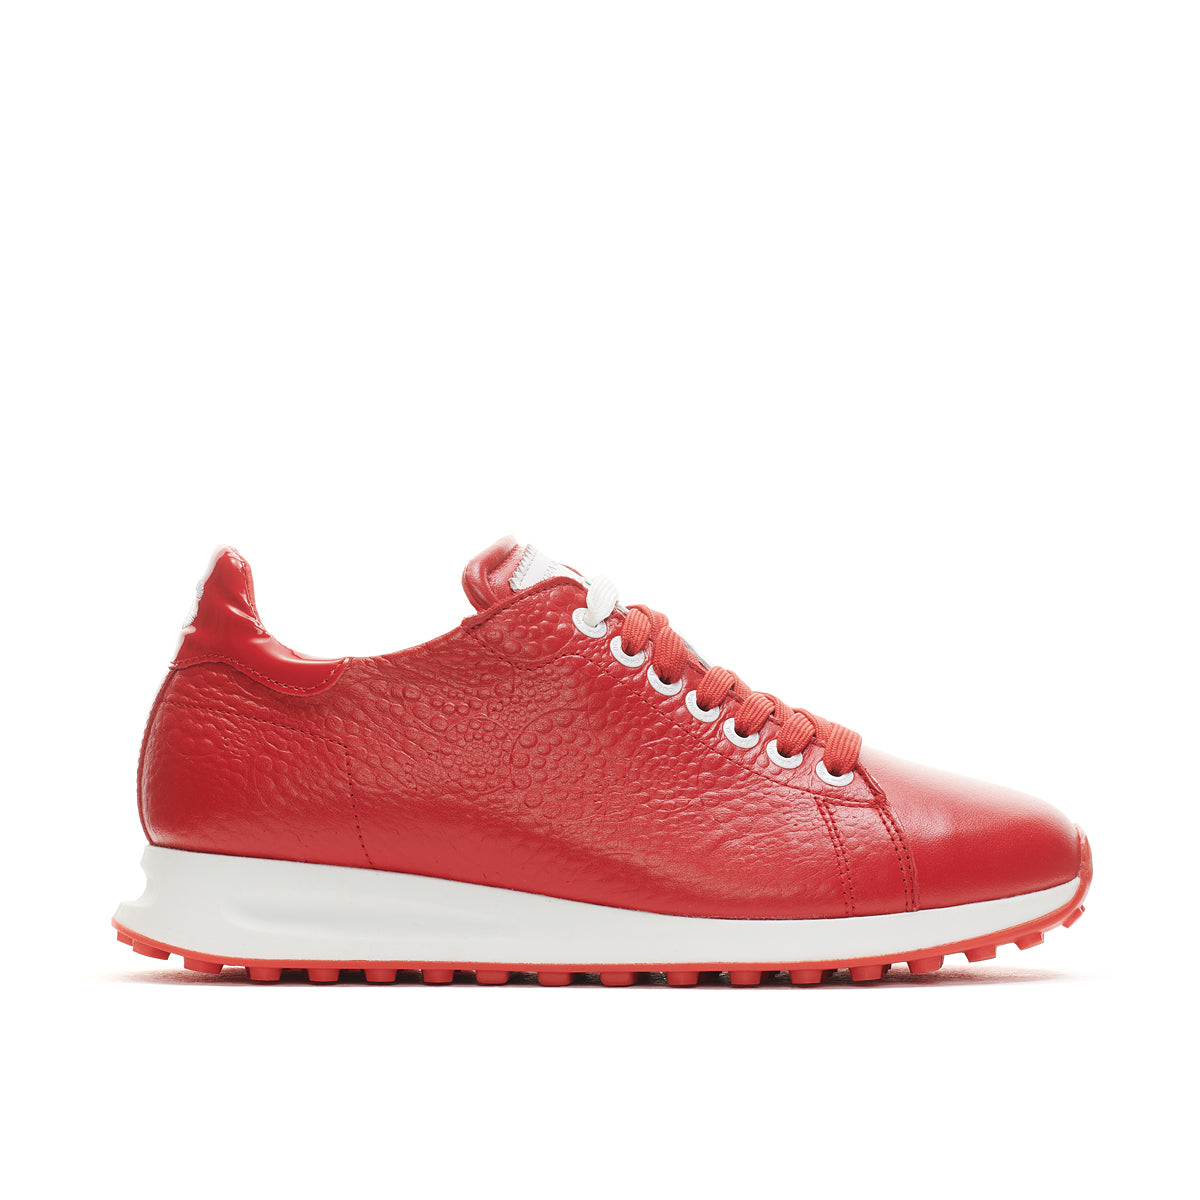 Atlantis Red - Women's Golf Shoes 